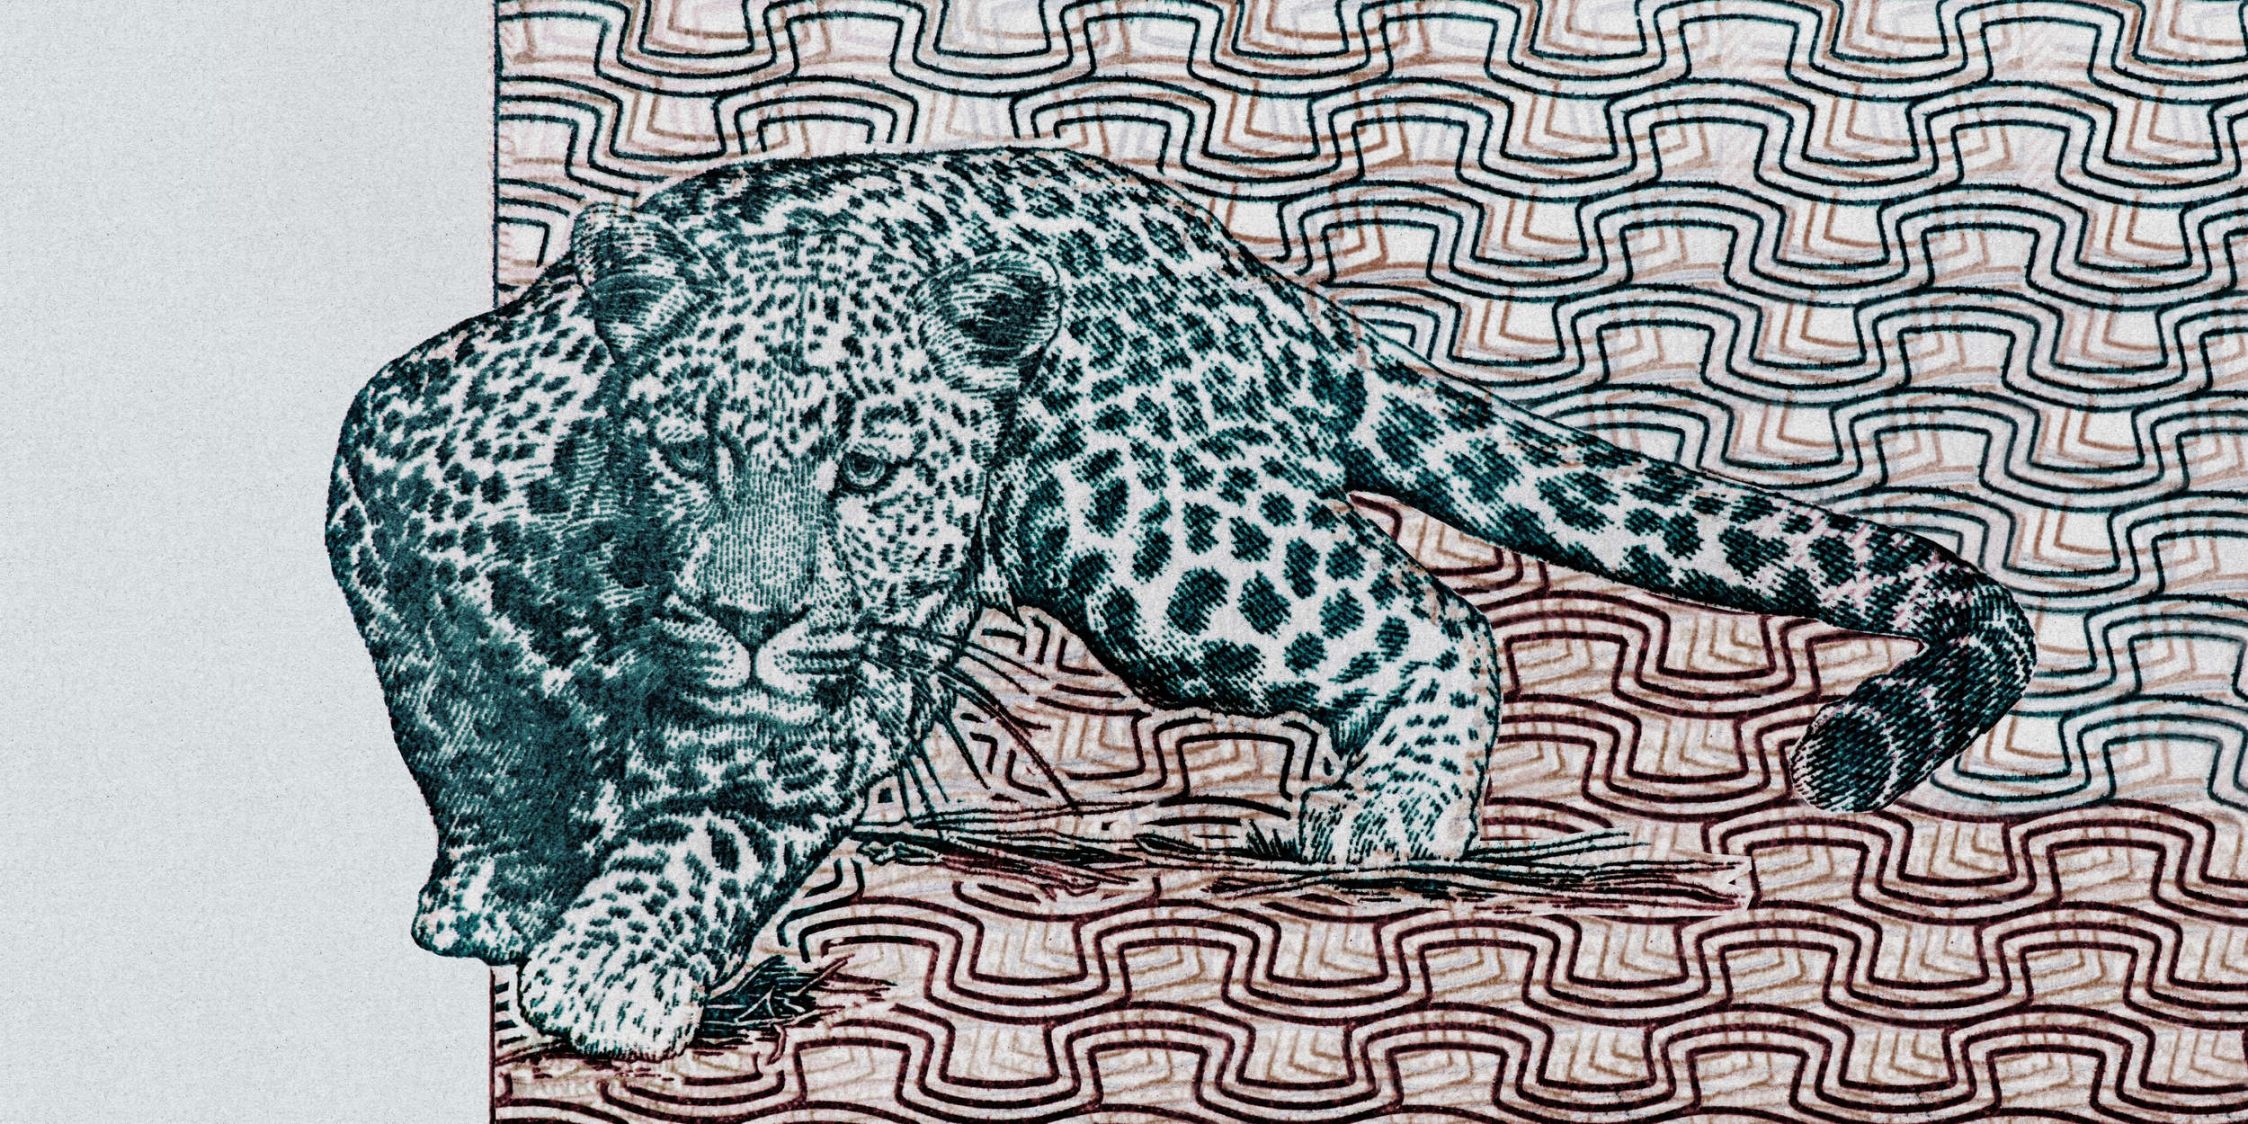             Fotomurali »yugana« - leopardo davanti a un motivo astratto - texture carta kraft | tessuto non tessuto leggero
        